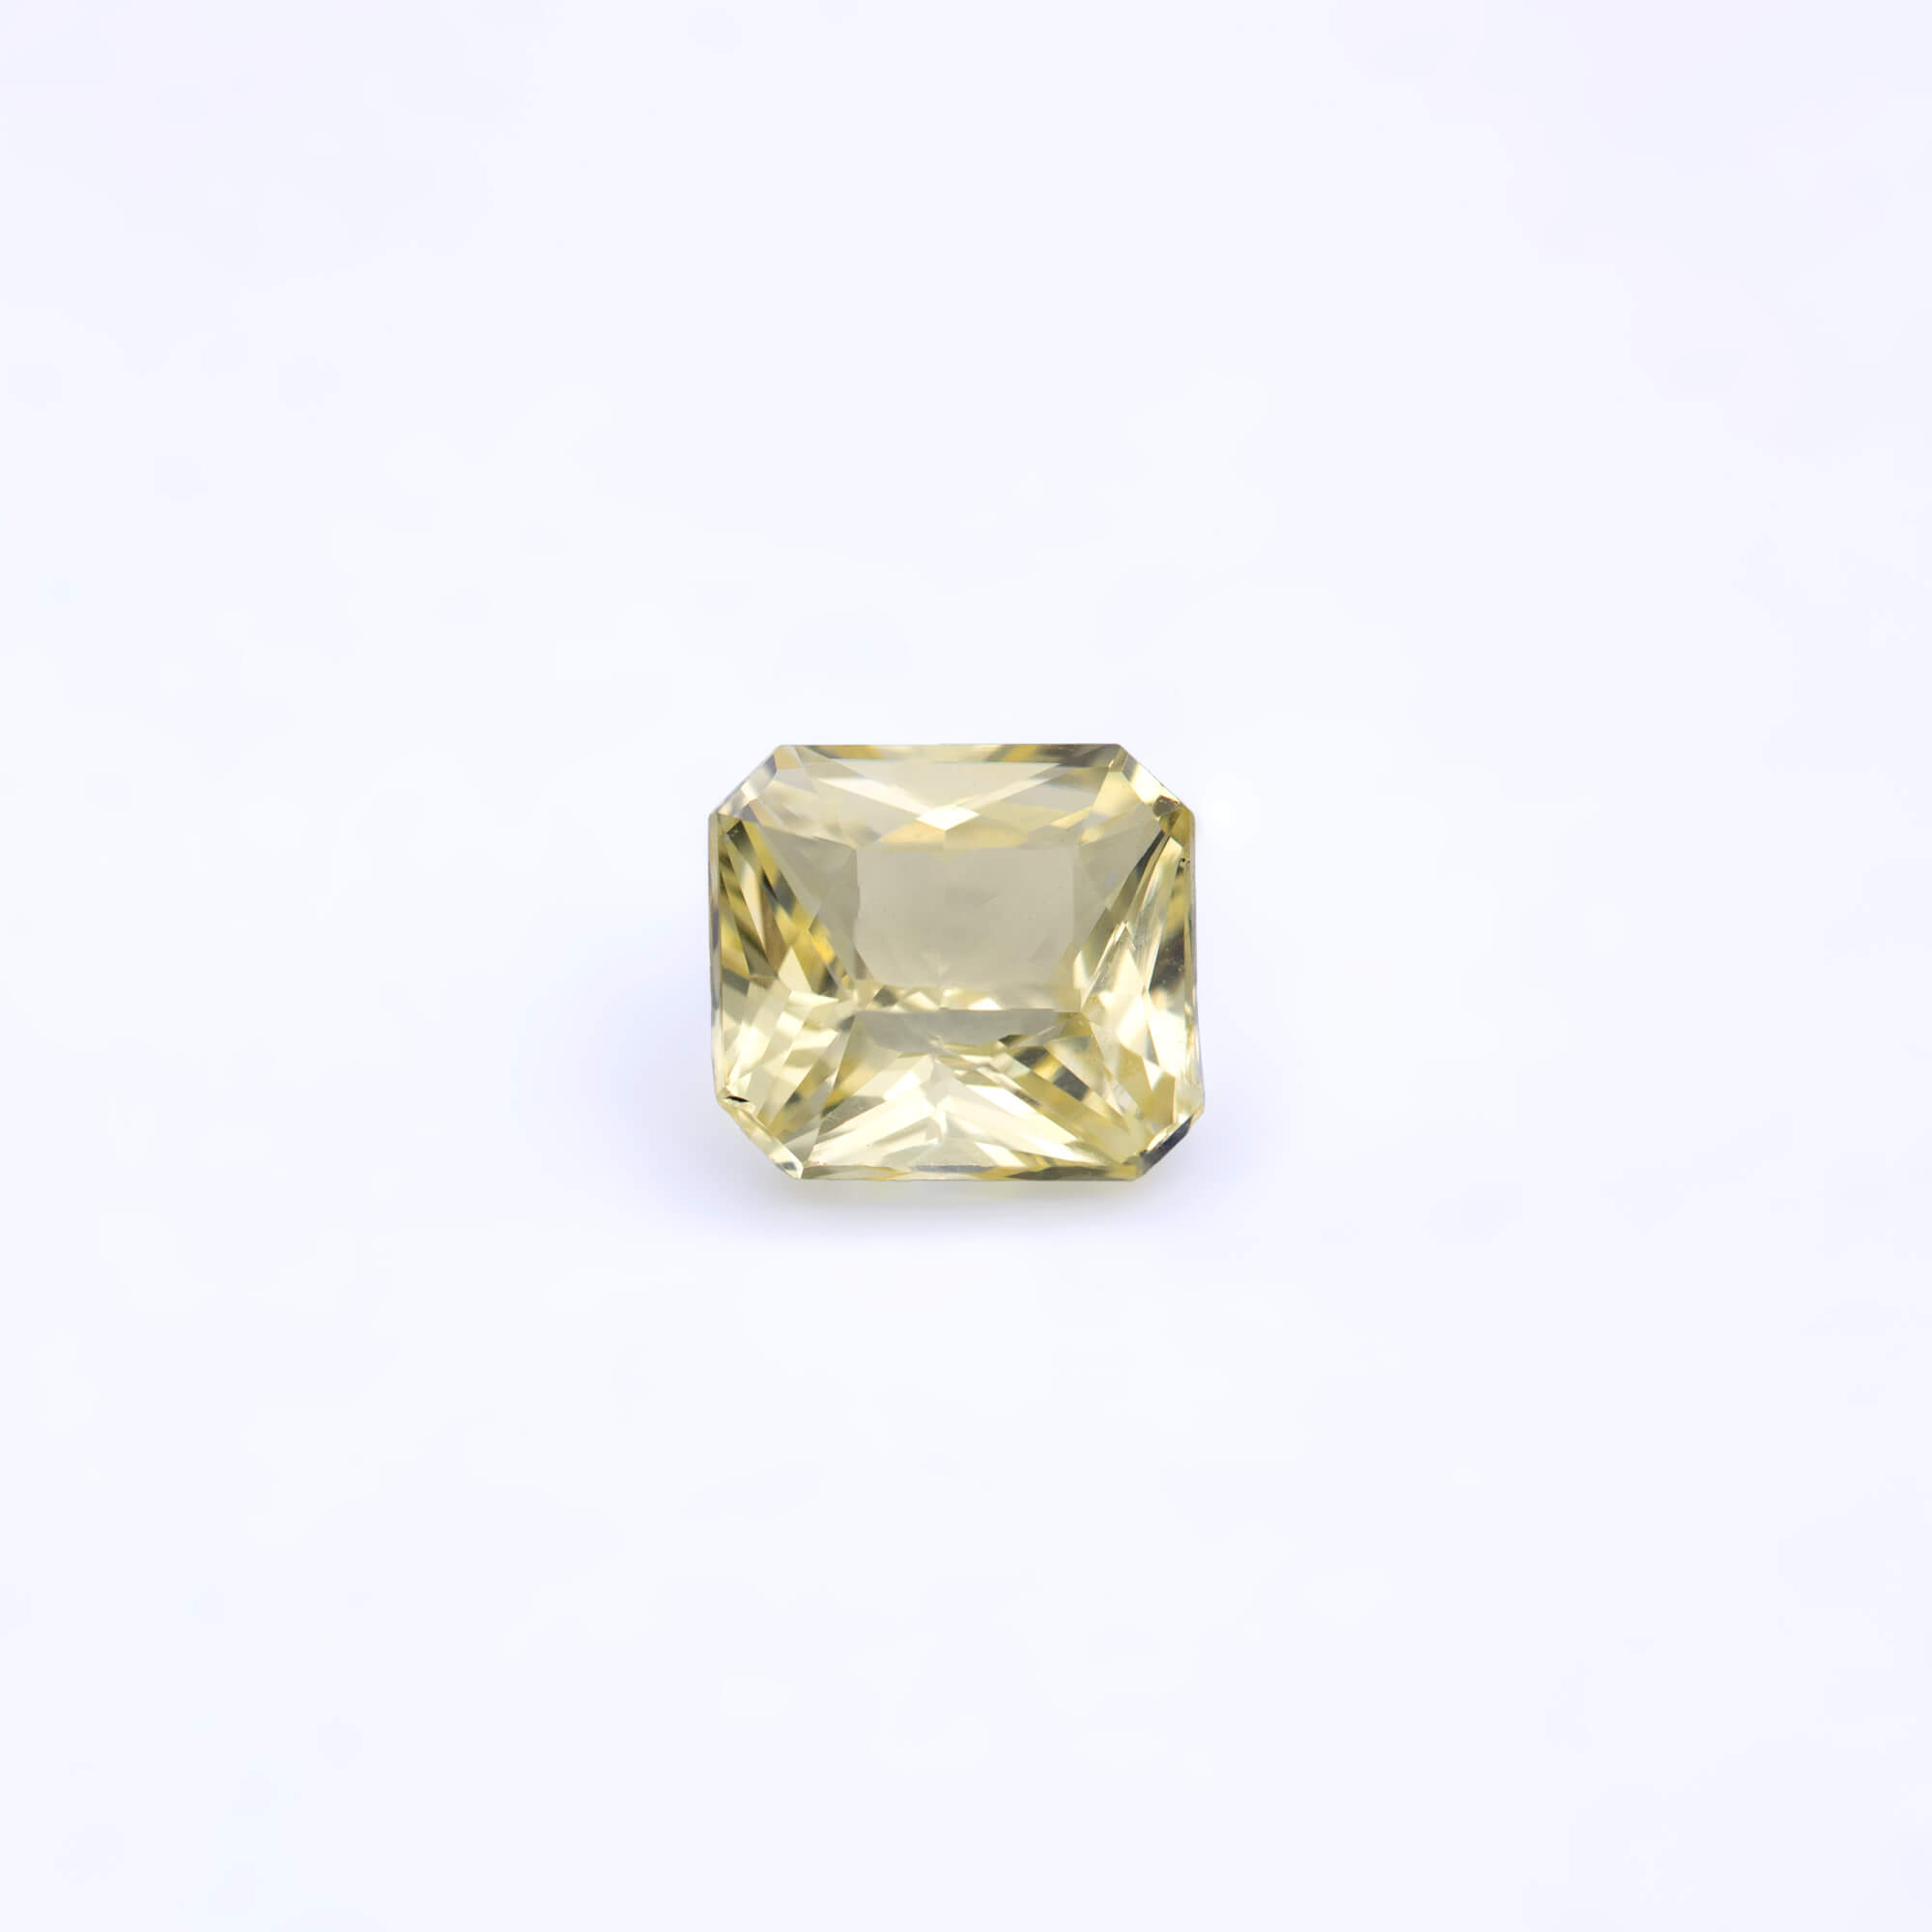 un-heated yellow sapphire